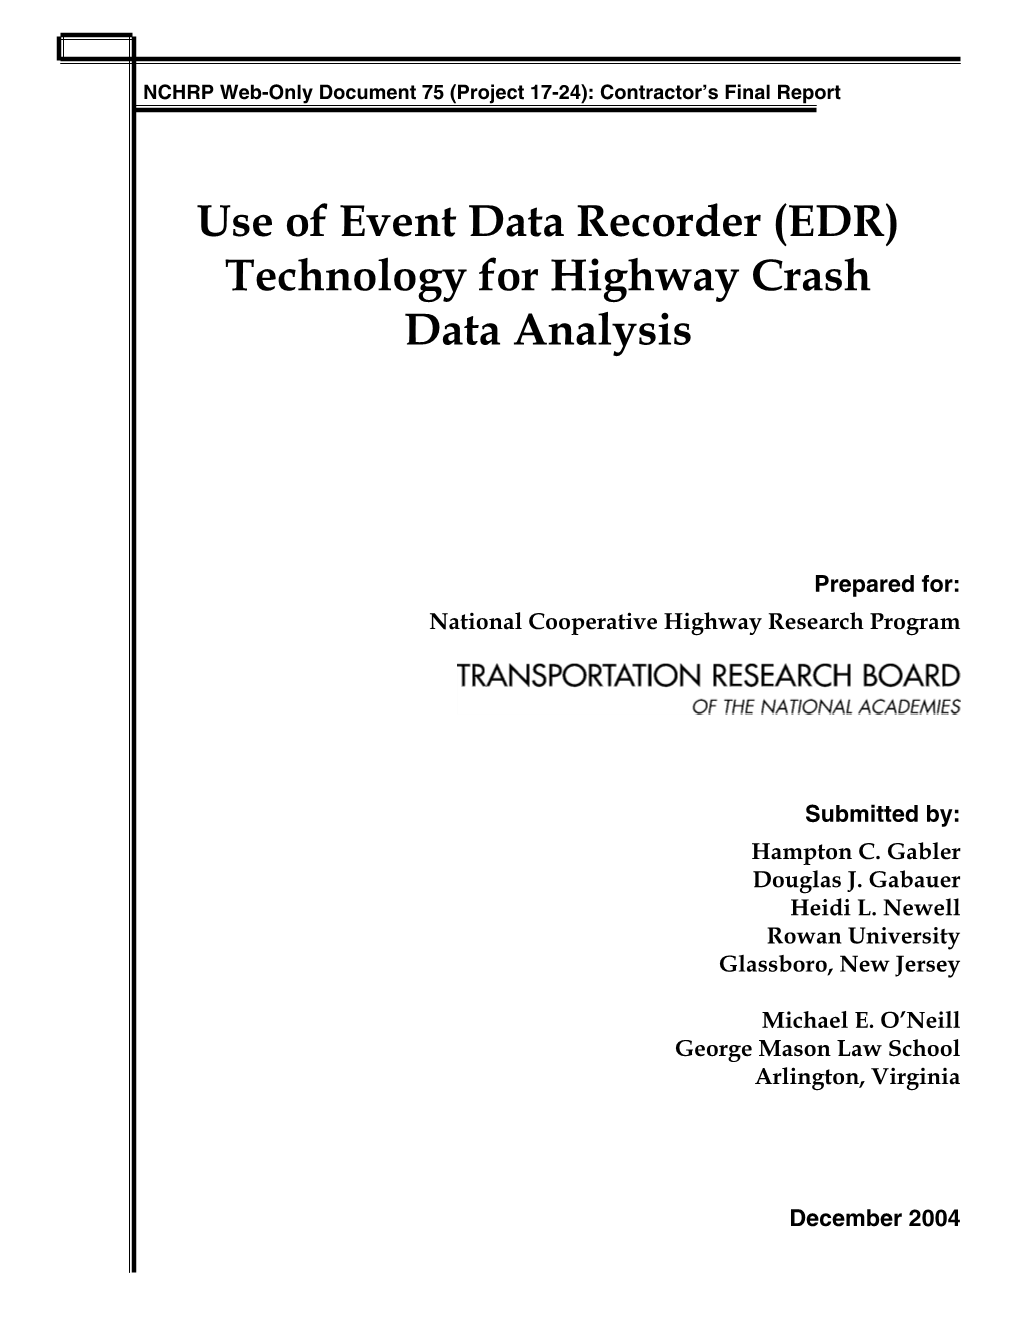 Use of Event Data Recorder (EDR) Technology for Highway Crash Data Analysis